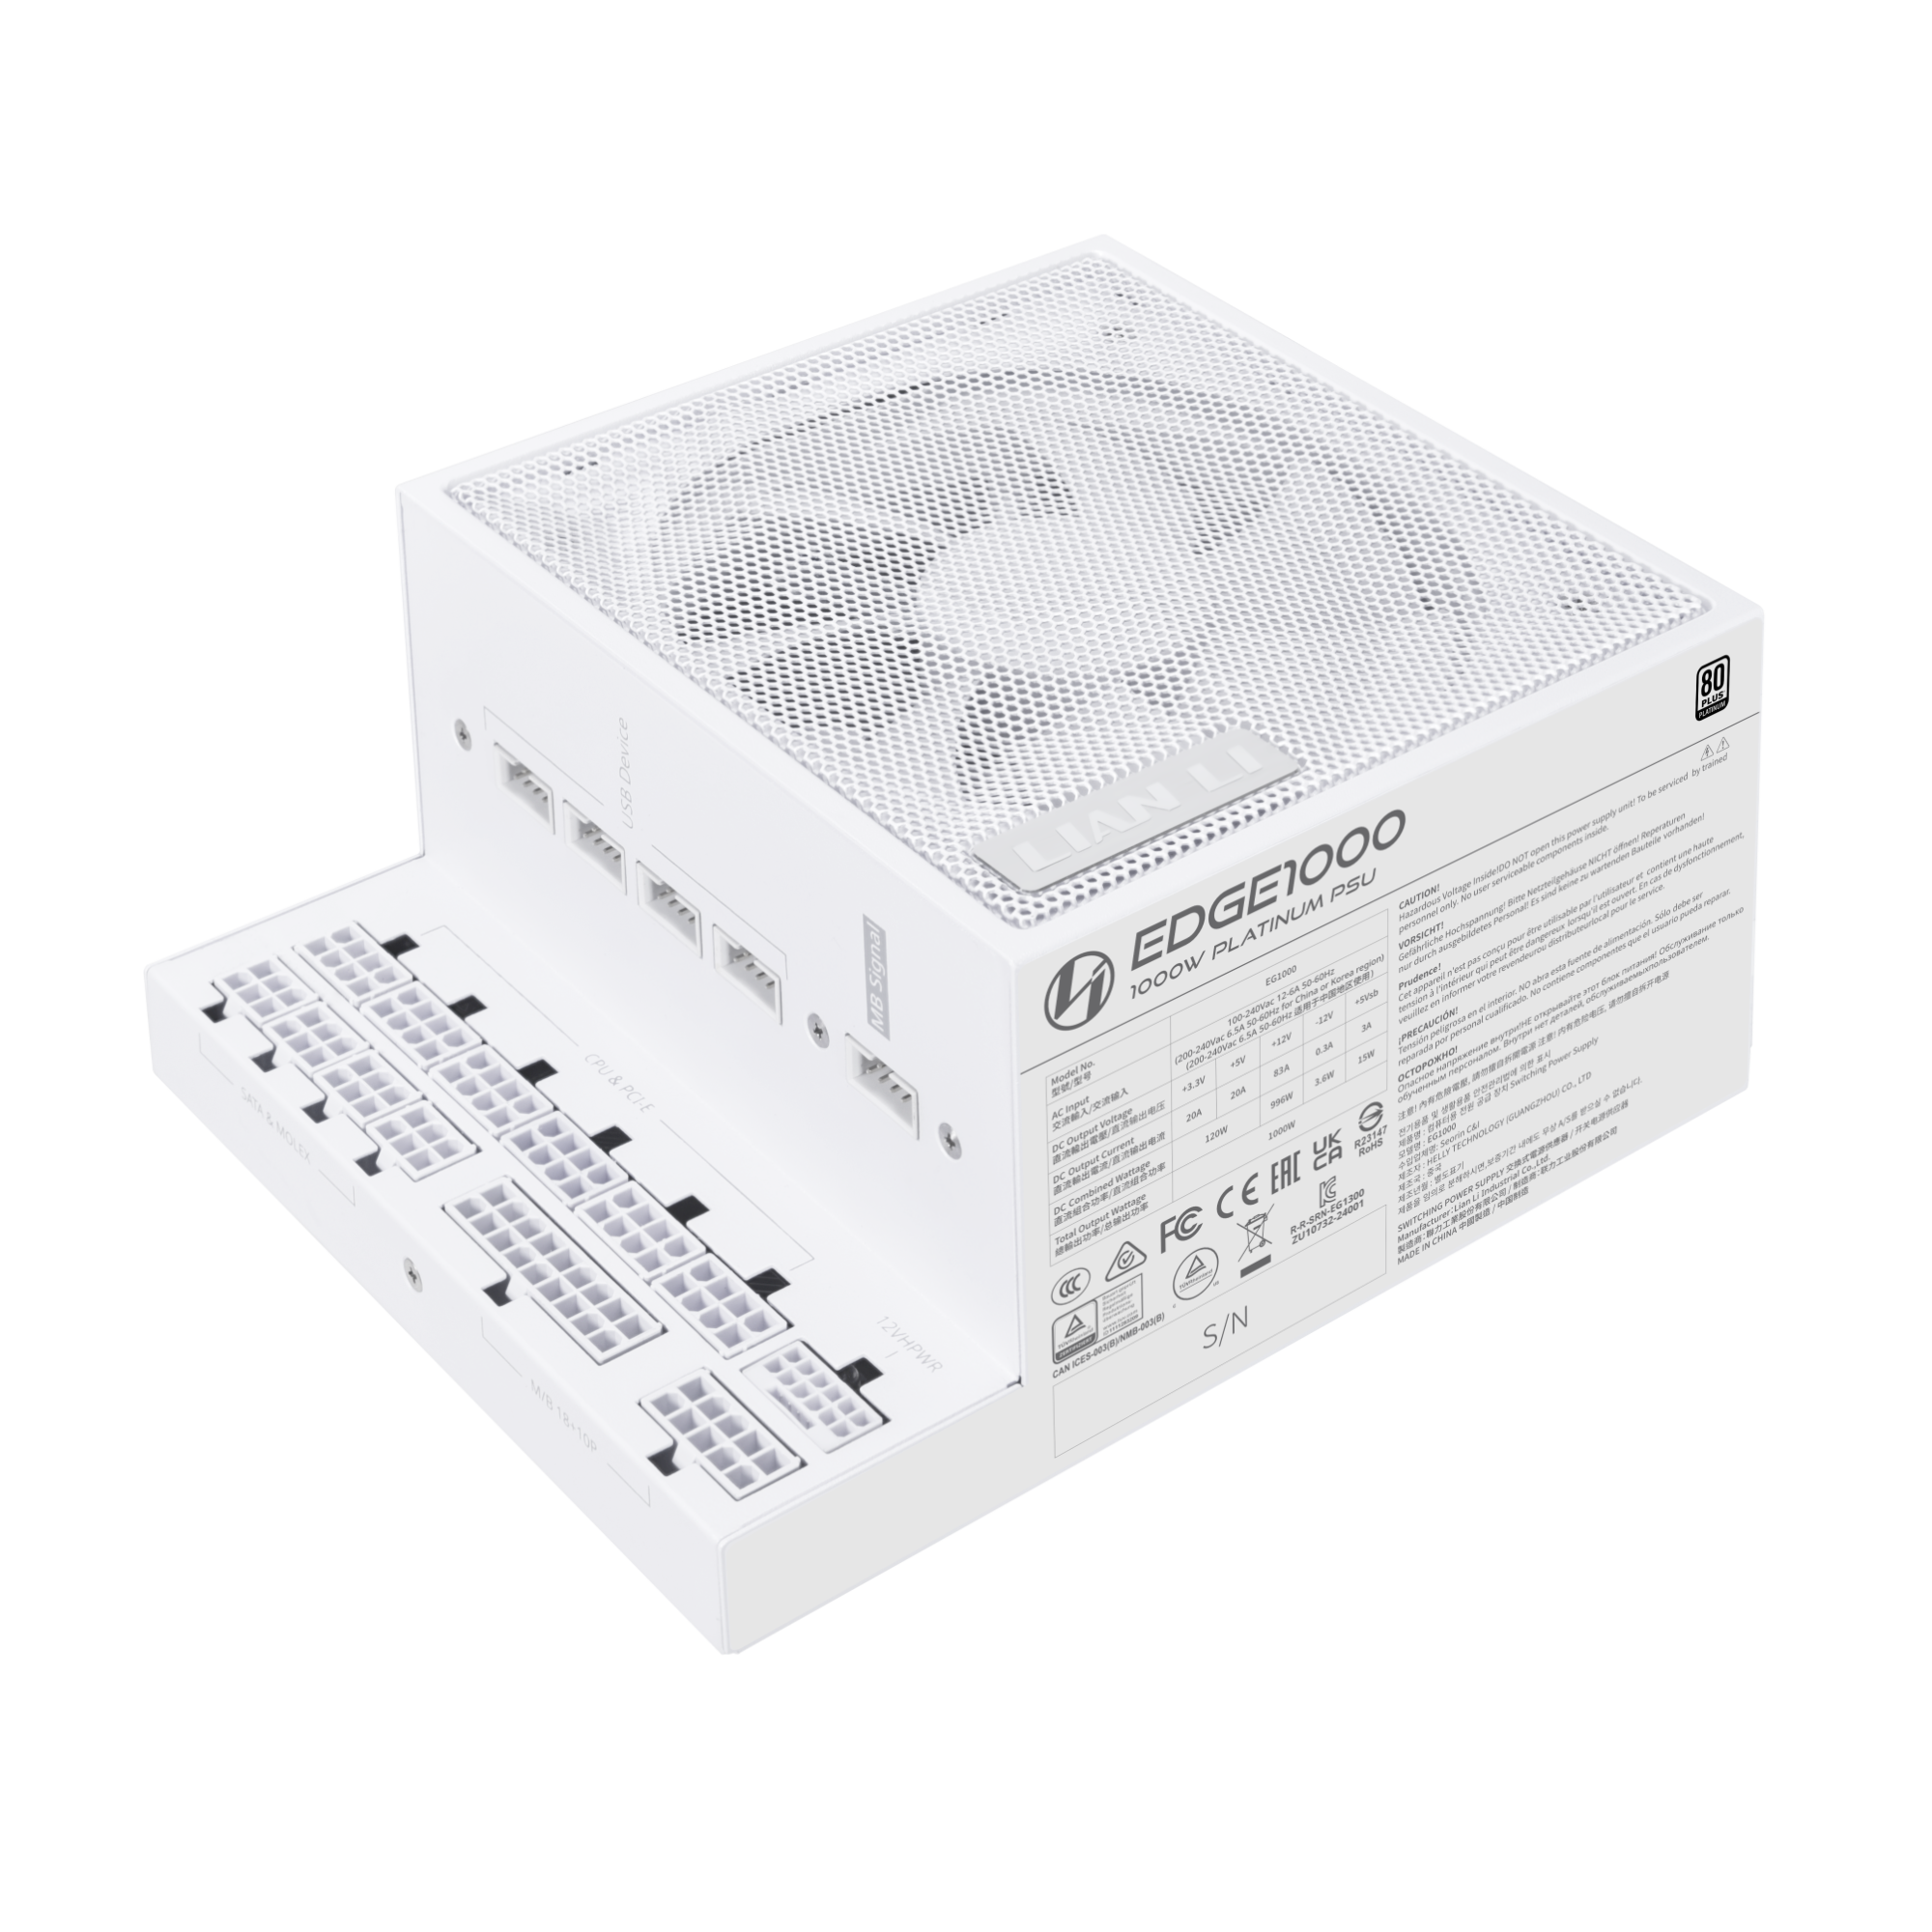 Lian Li EDGE 1000w 80 Plus Platinum Power Supply - White